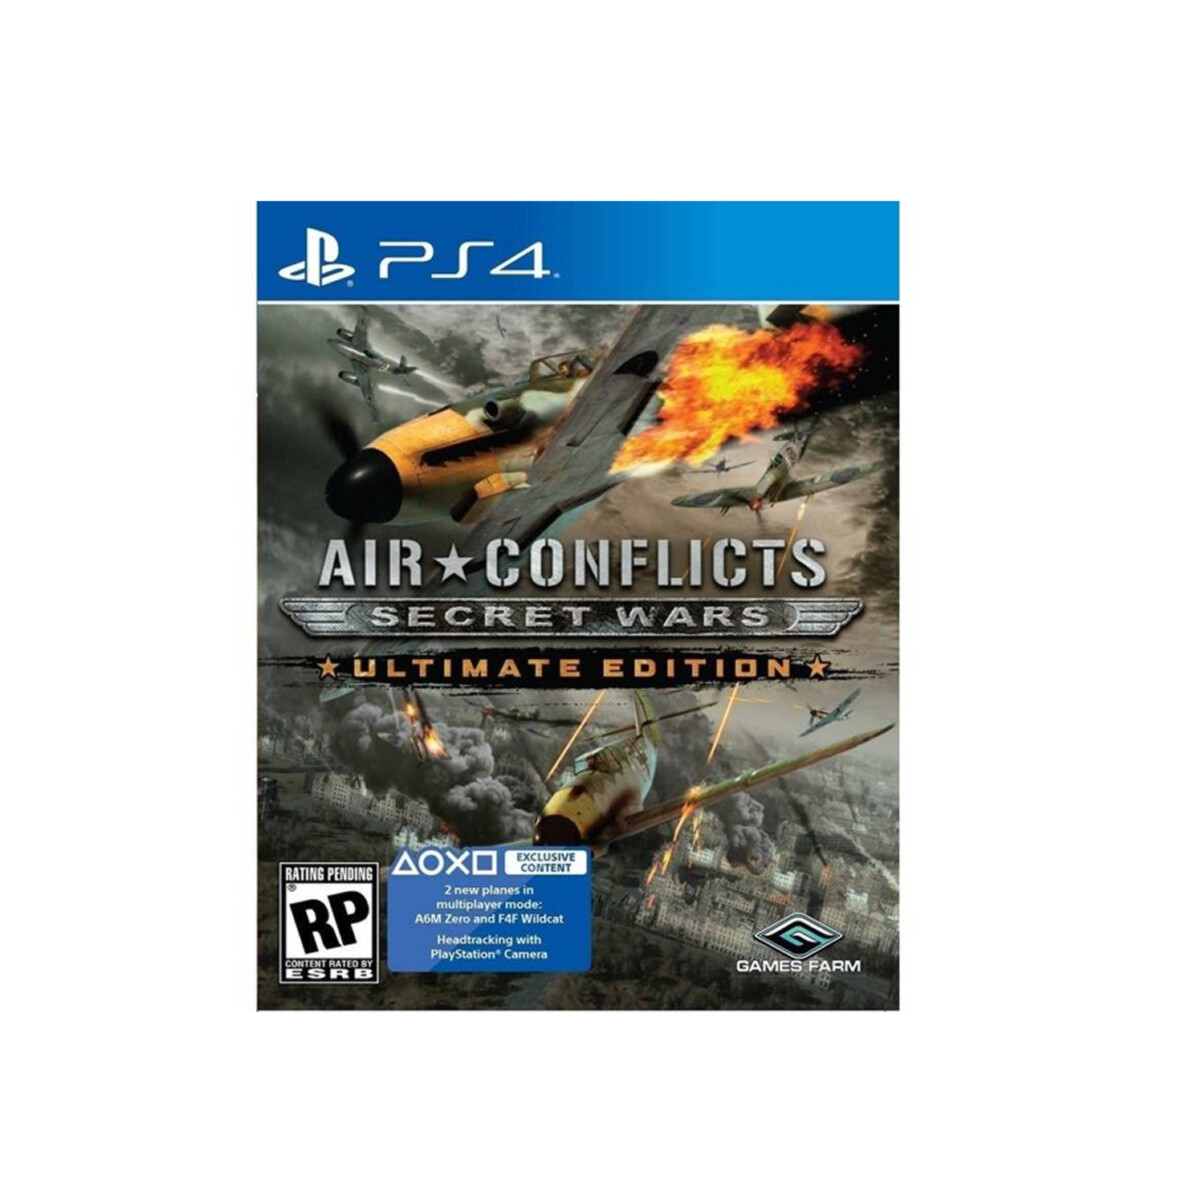 PS4 AIR CONFLICTS SECRET WARS 